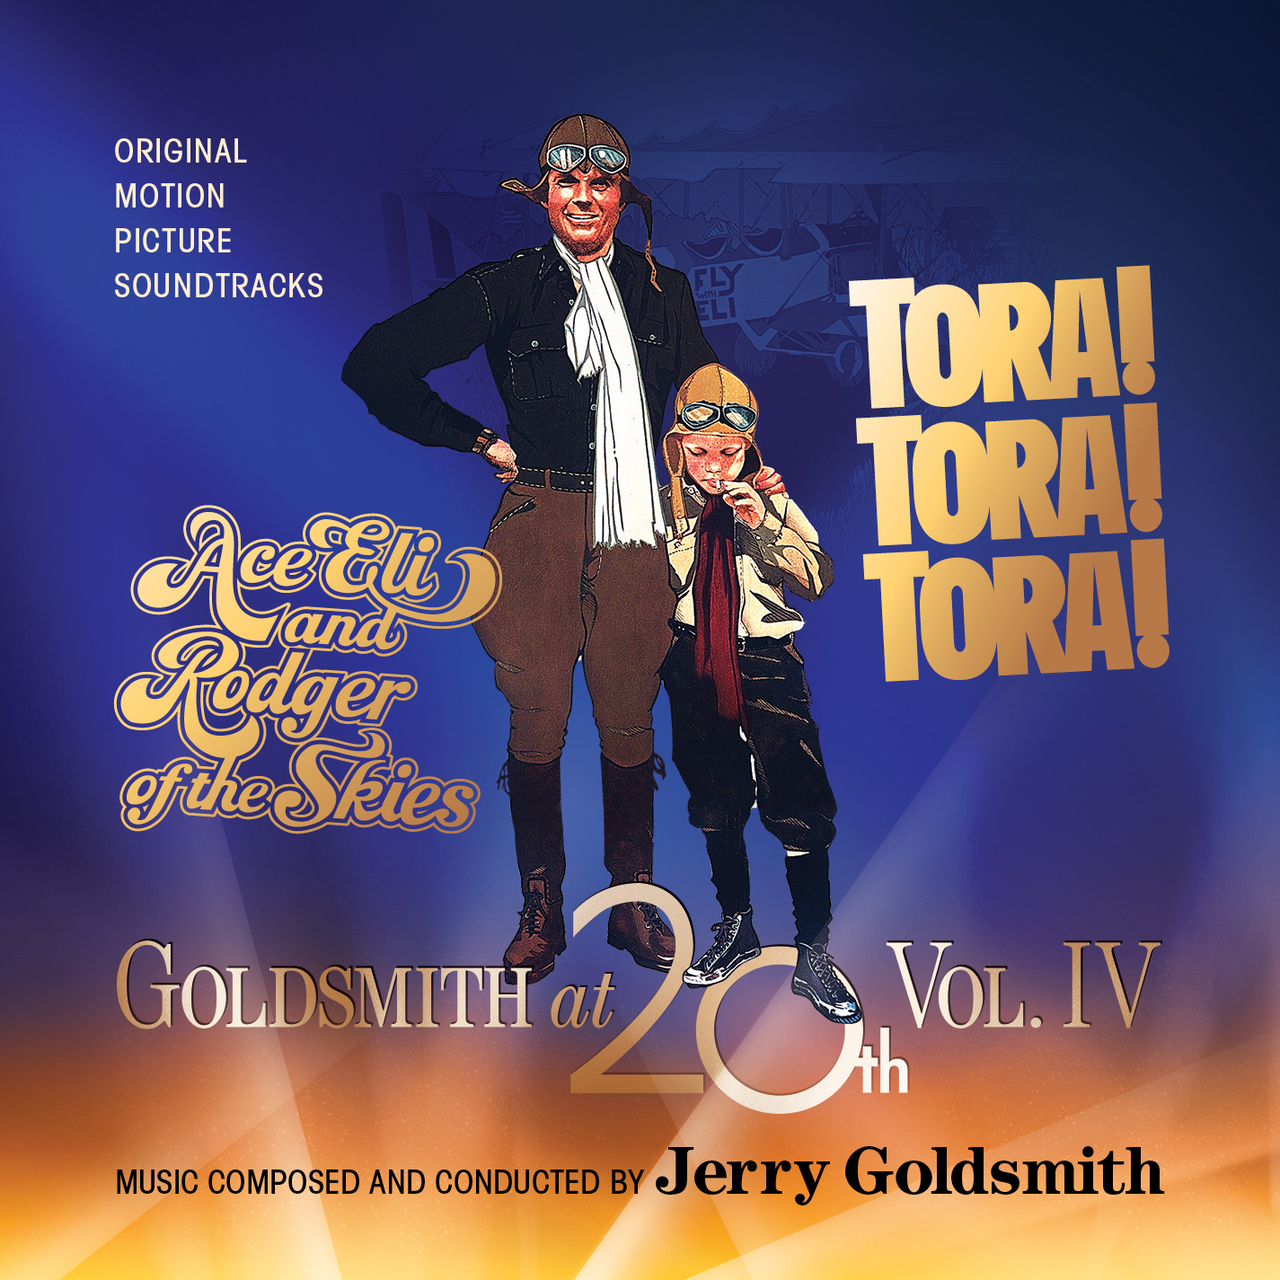 Goldsmith At 20th Vol. IV  Ace Eli And Rodger Of The Skies / Tora! Tora! Tora!. 